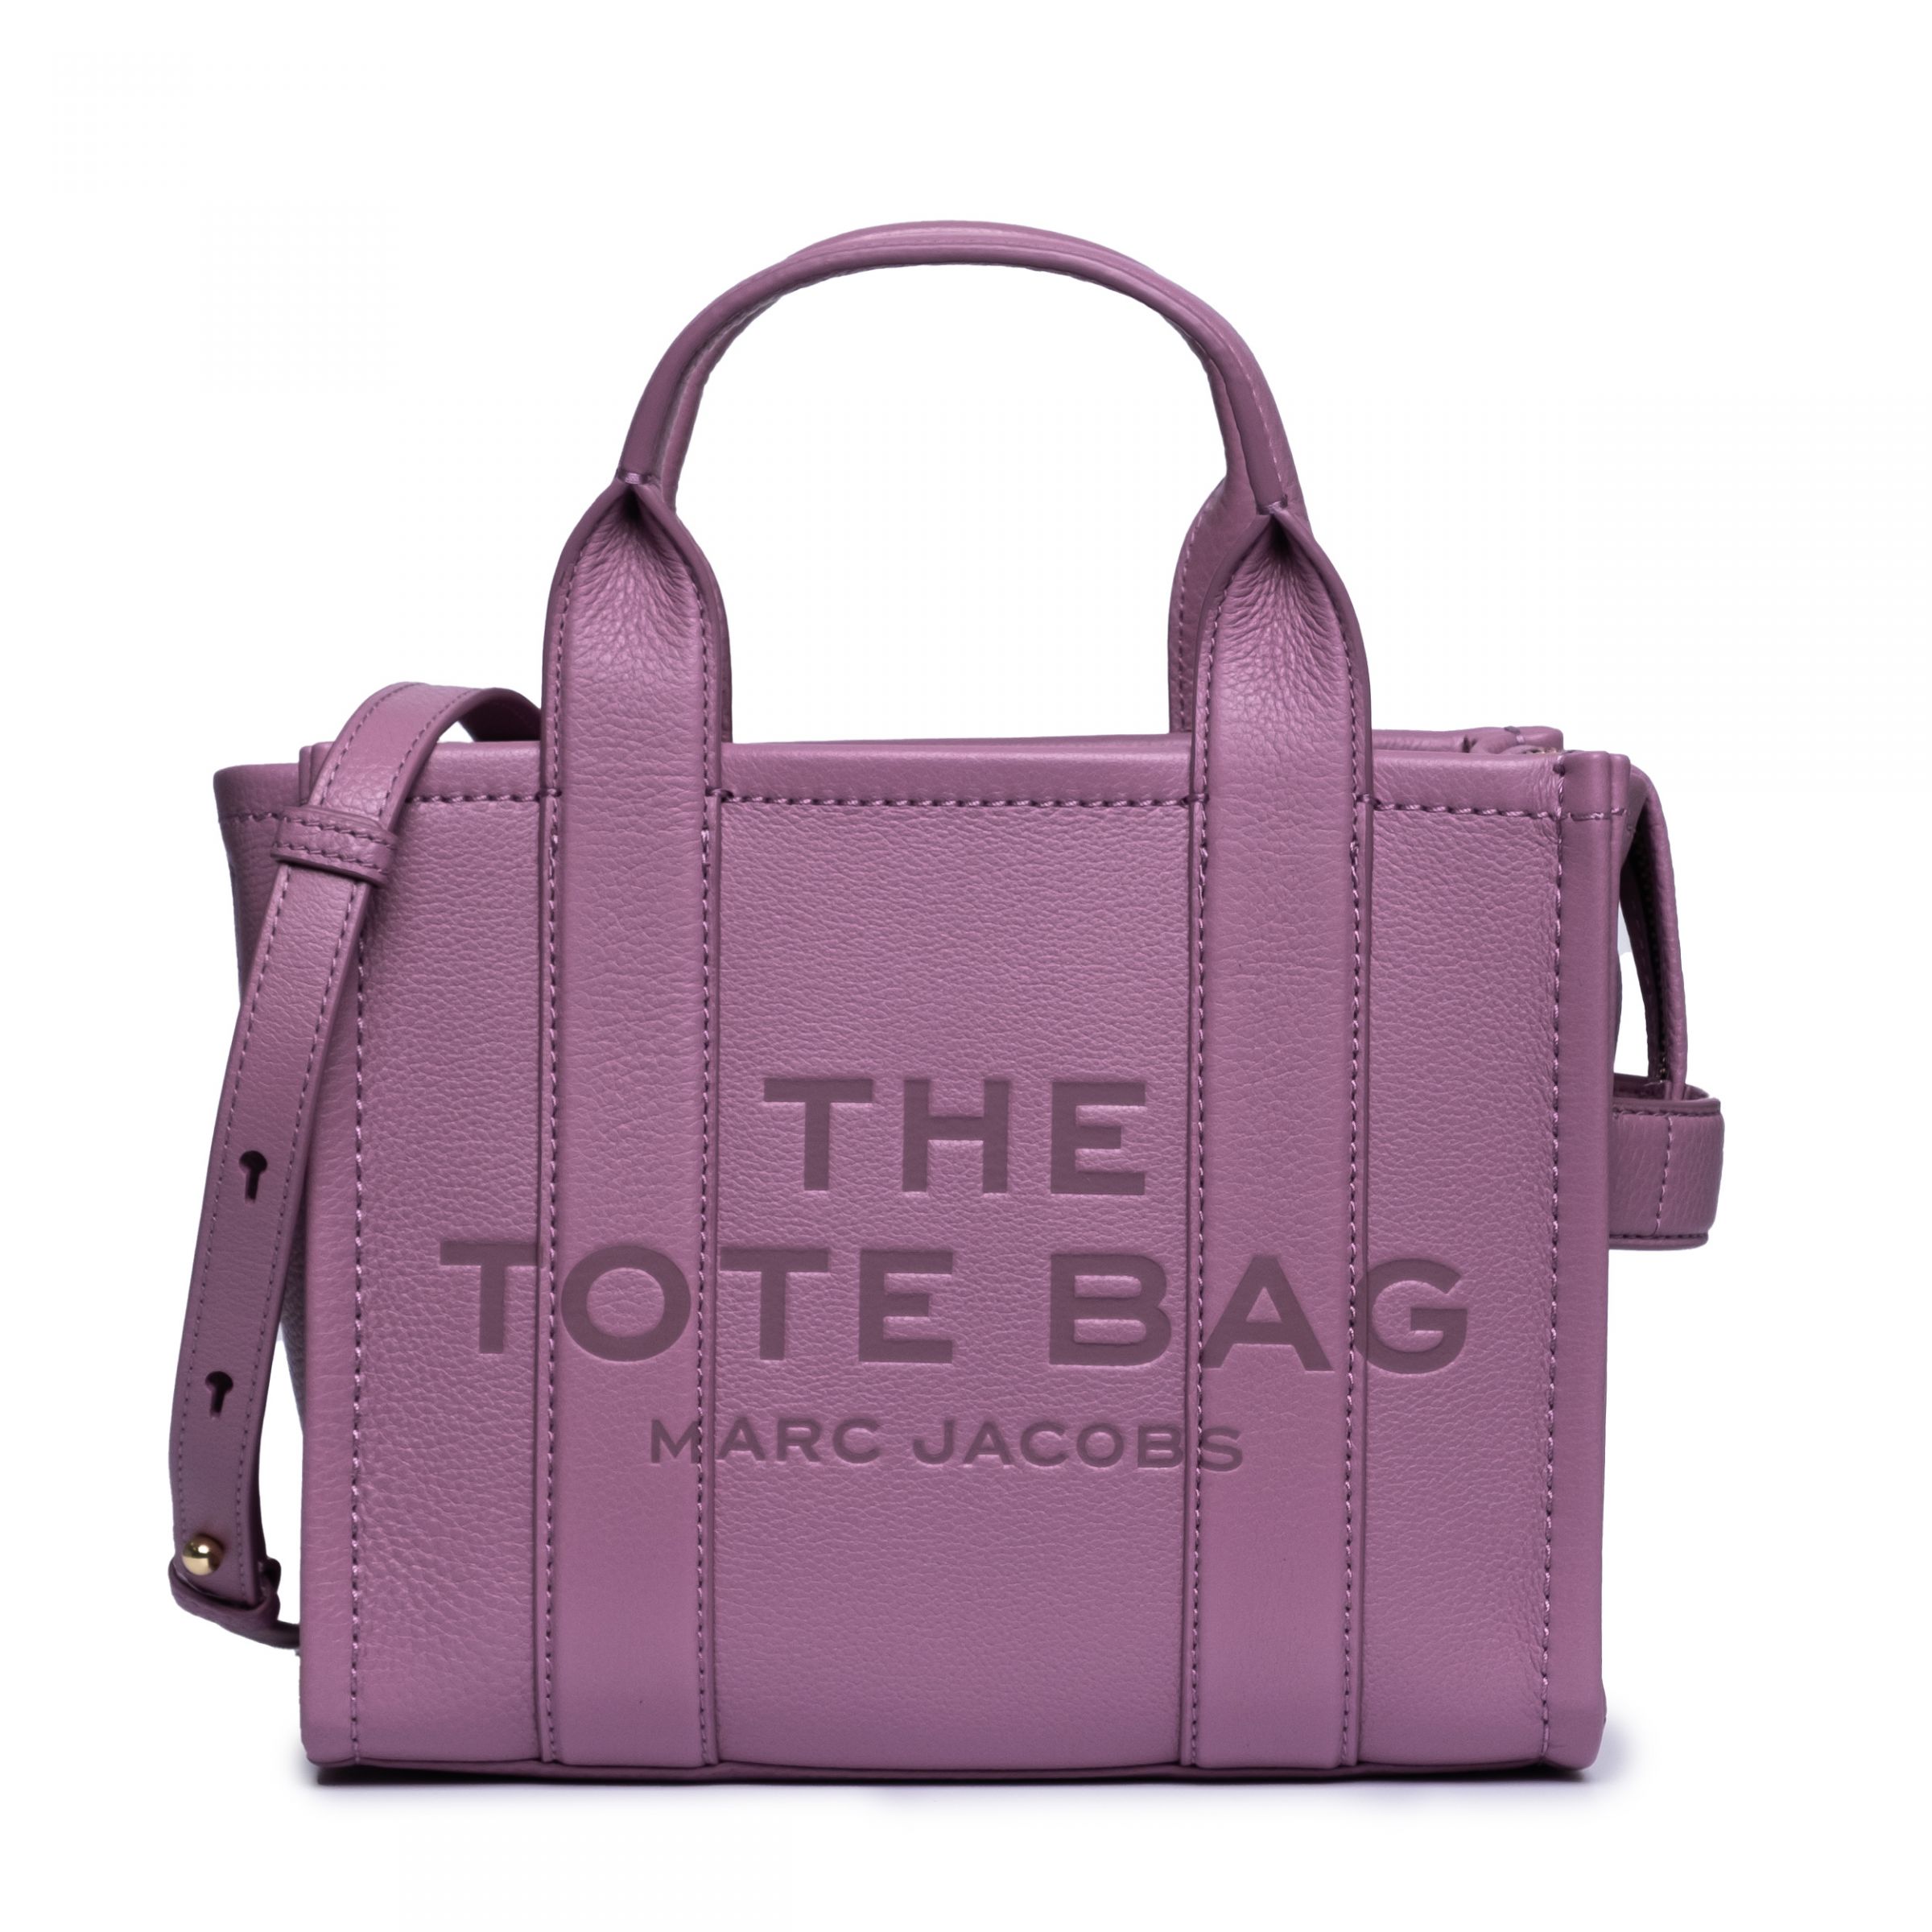 Сумка Marc Jacobs The Tote Bag лиловая